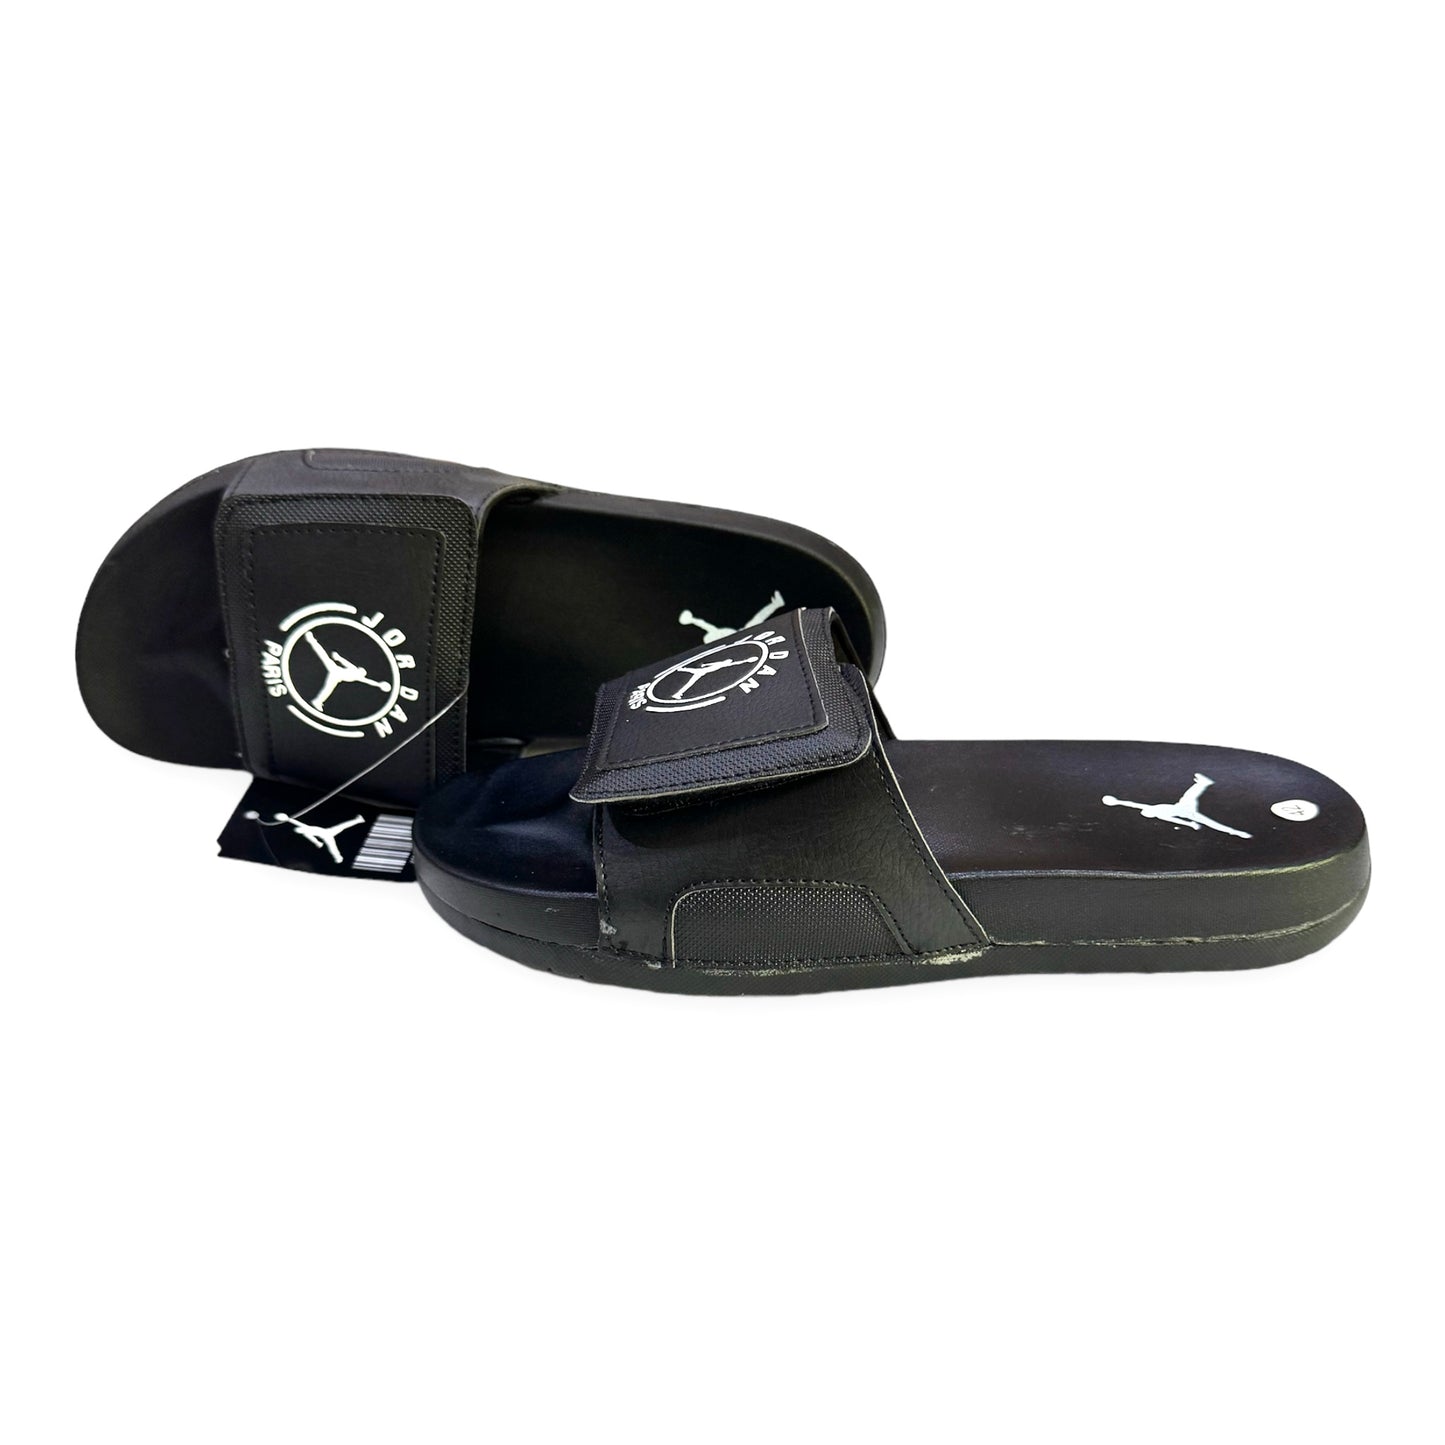 J-O-R-D-A-N Imported Premium Foambed Black Slides